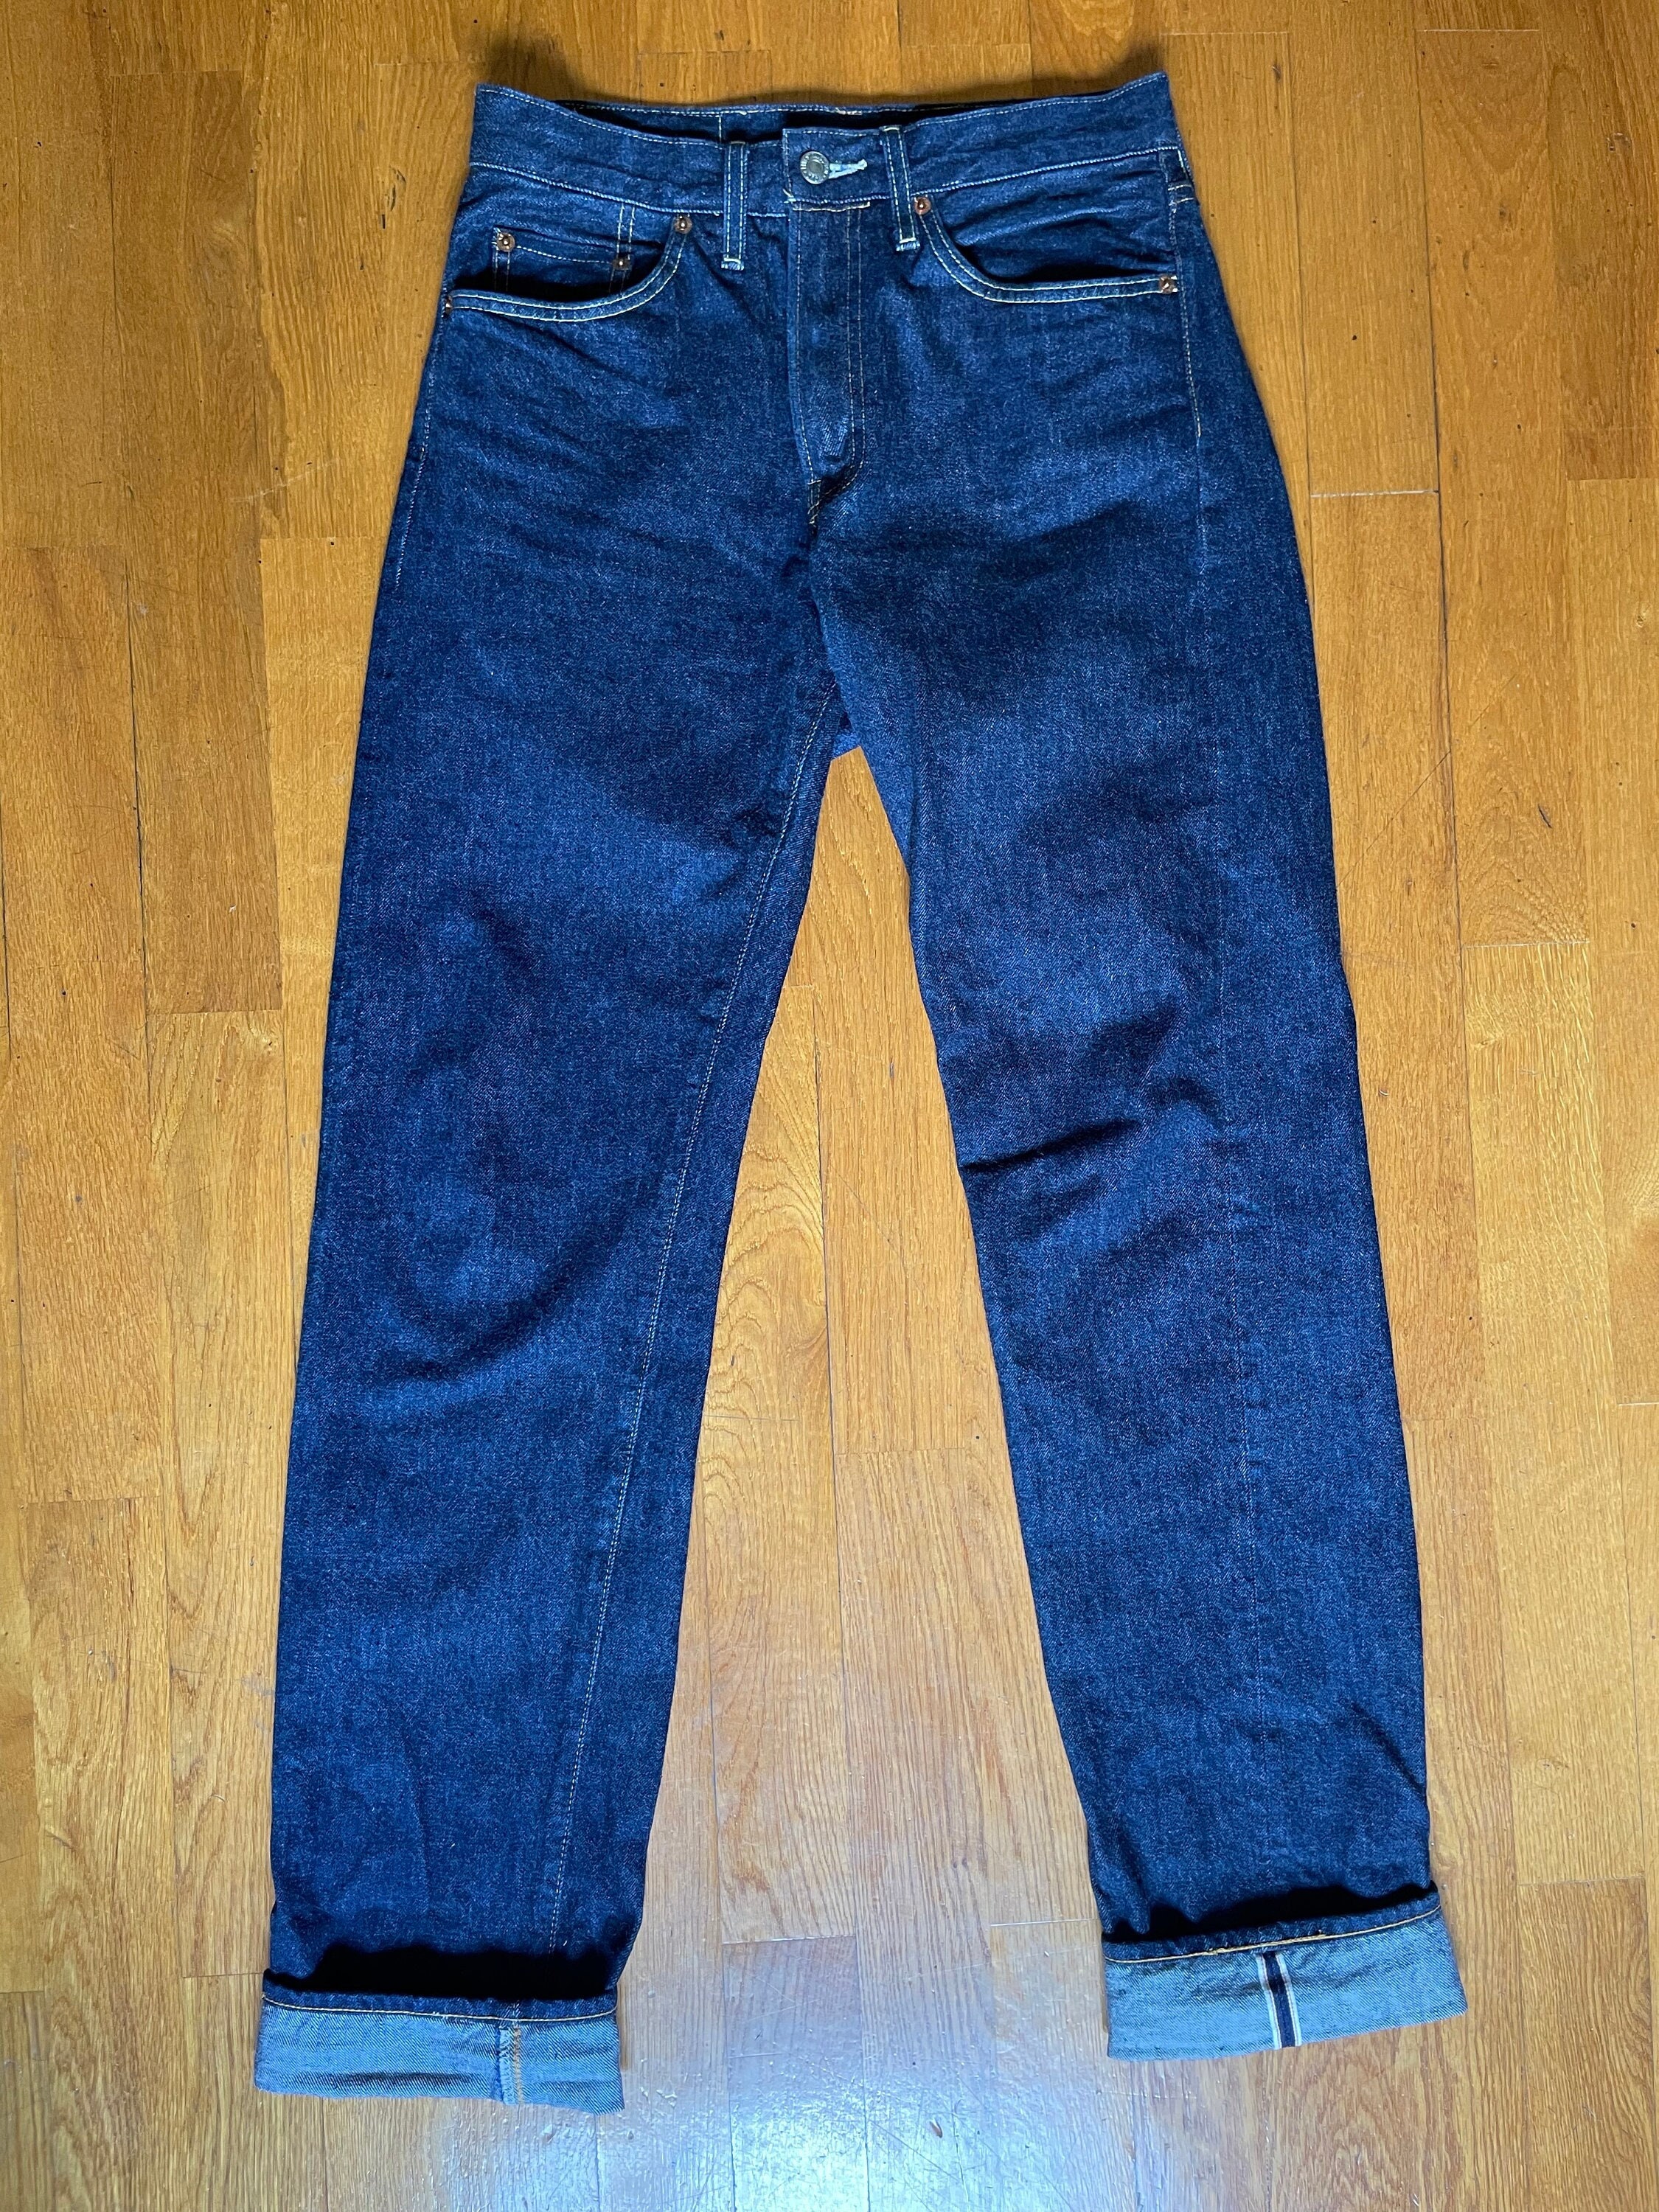 W32 Levis LVC 501XX Japan Made 1955 Selvedge Jeans